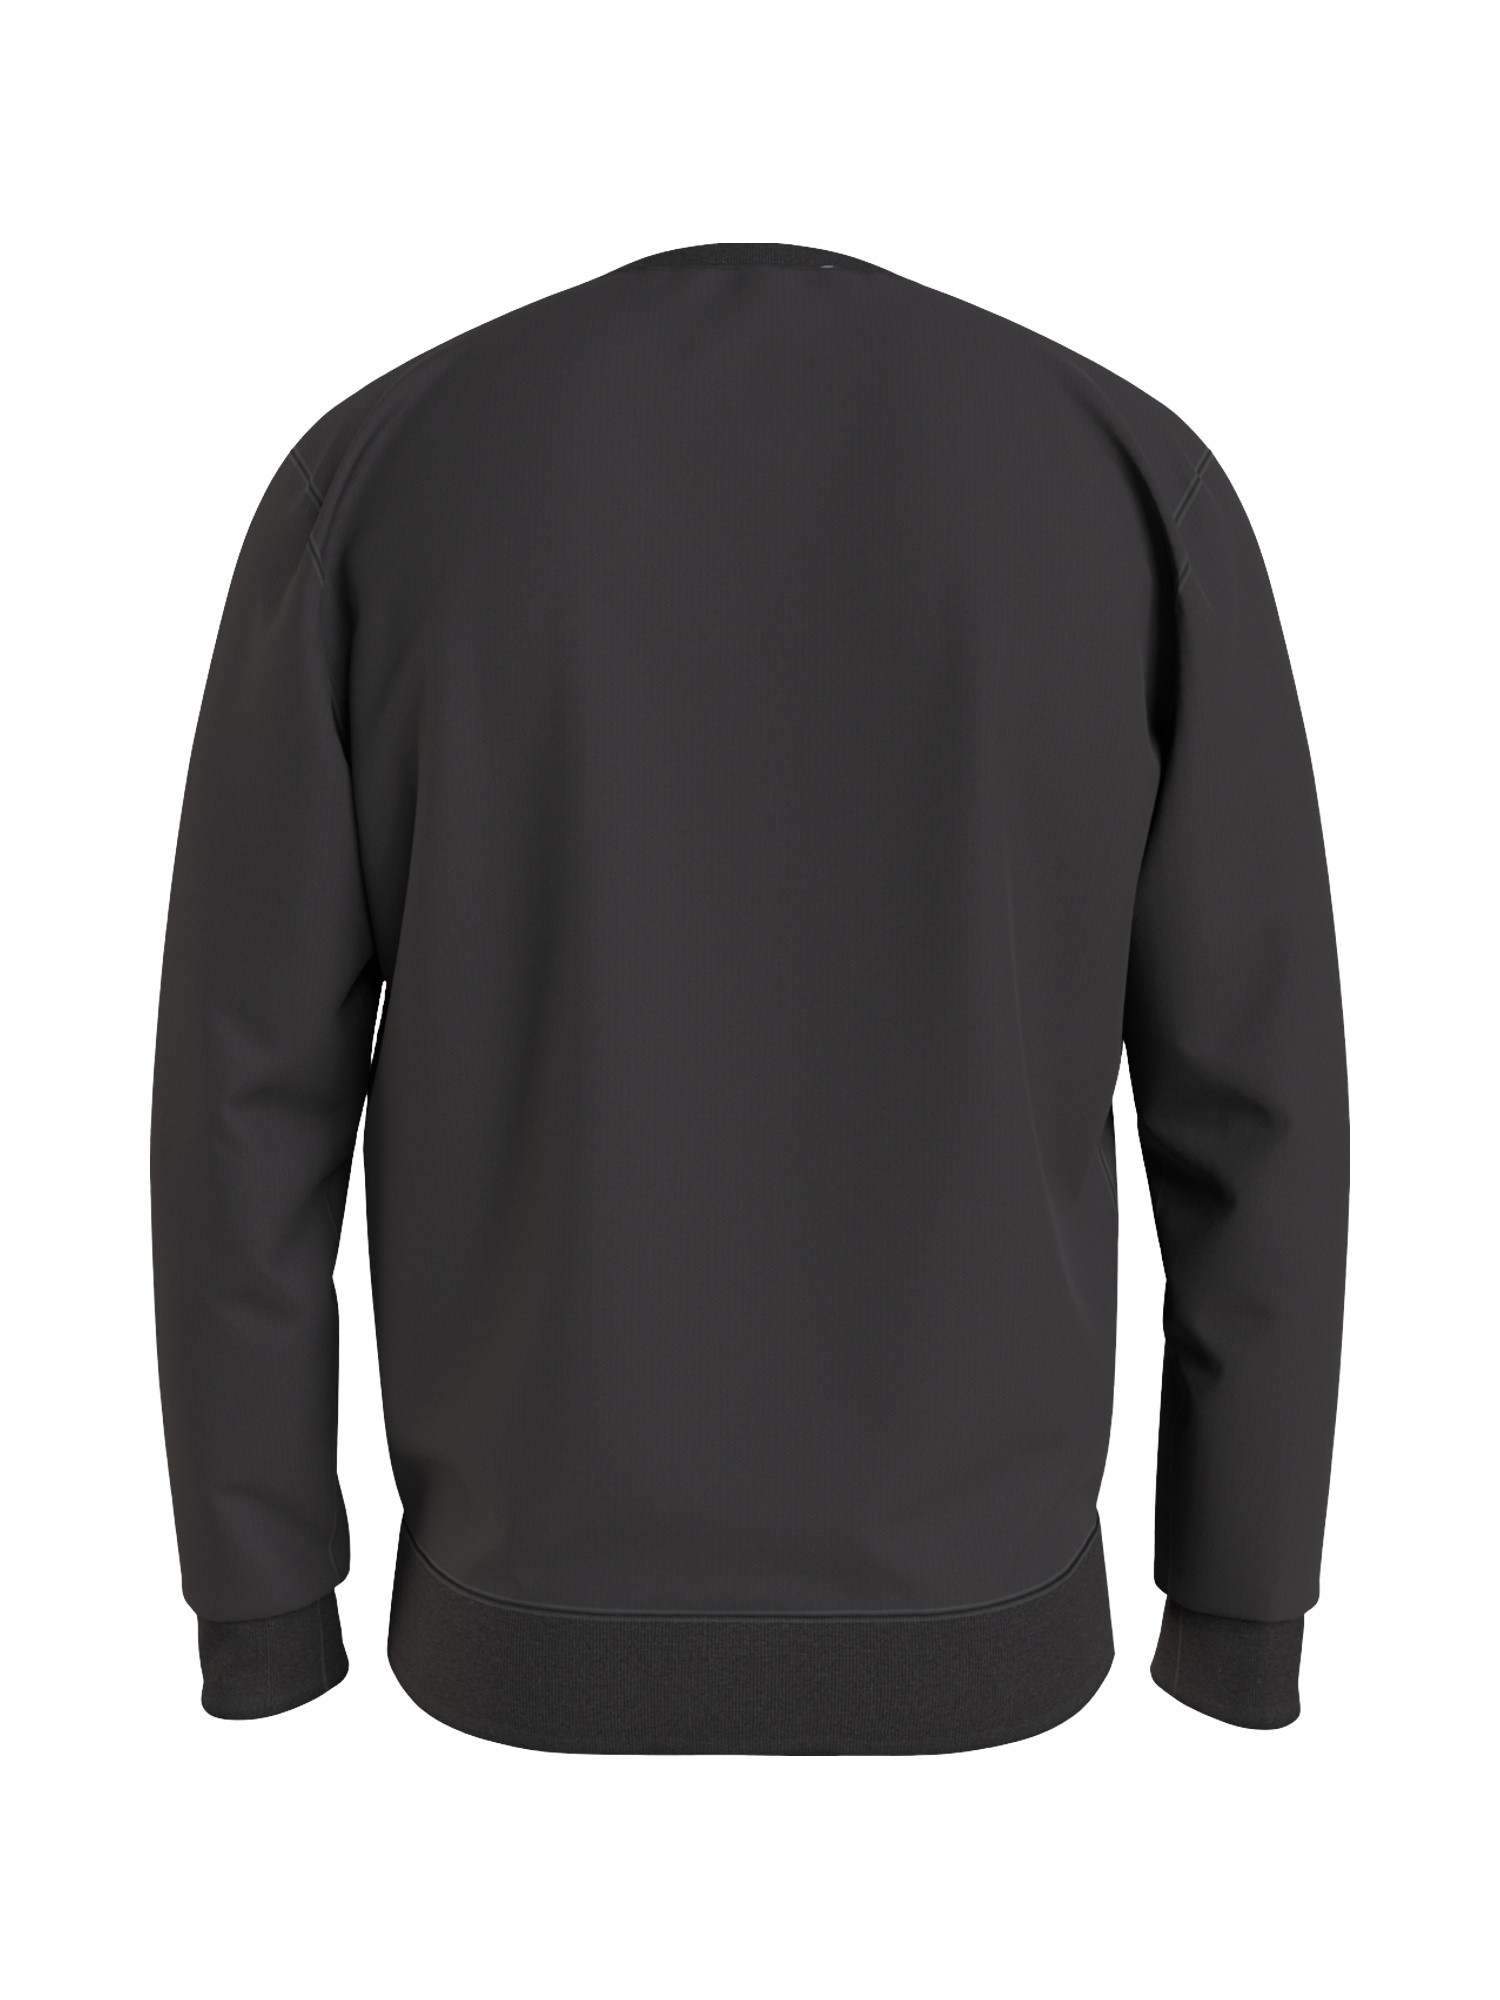 Crewneck sweatshirt with logo, Grey, large image number 1